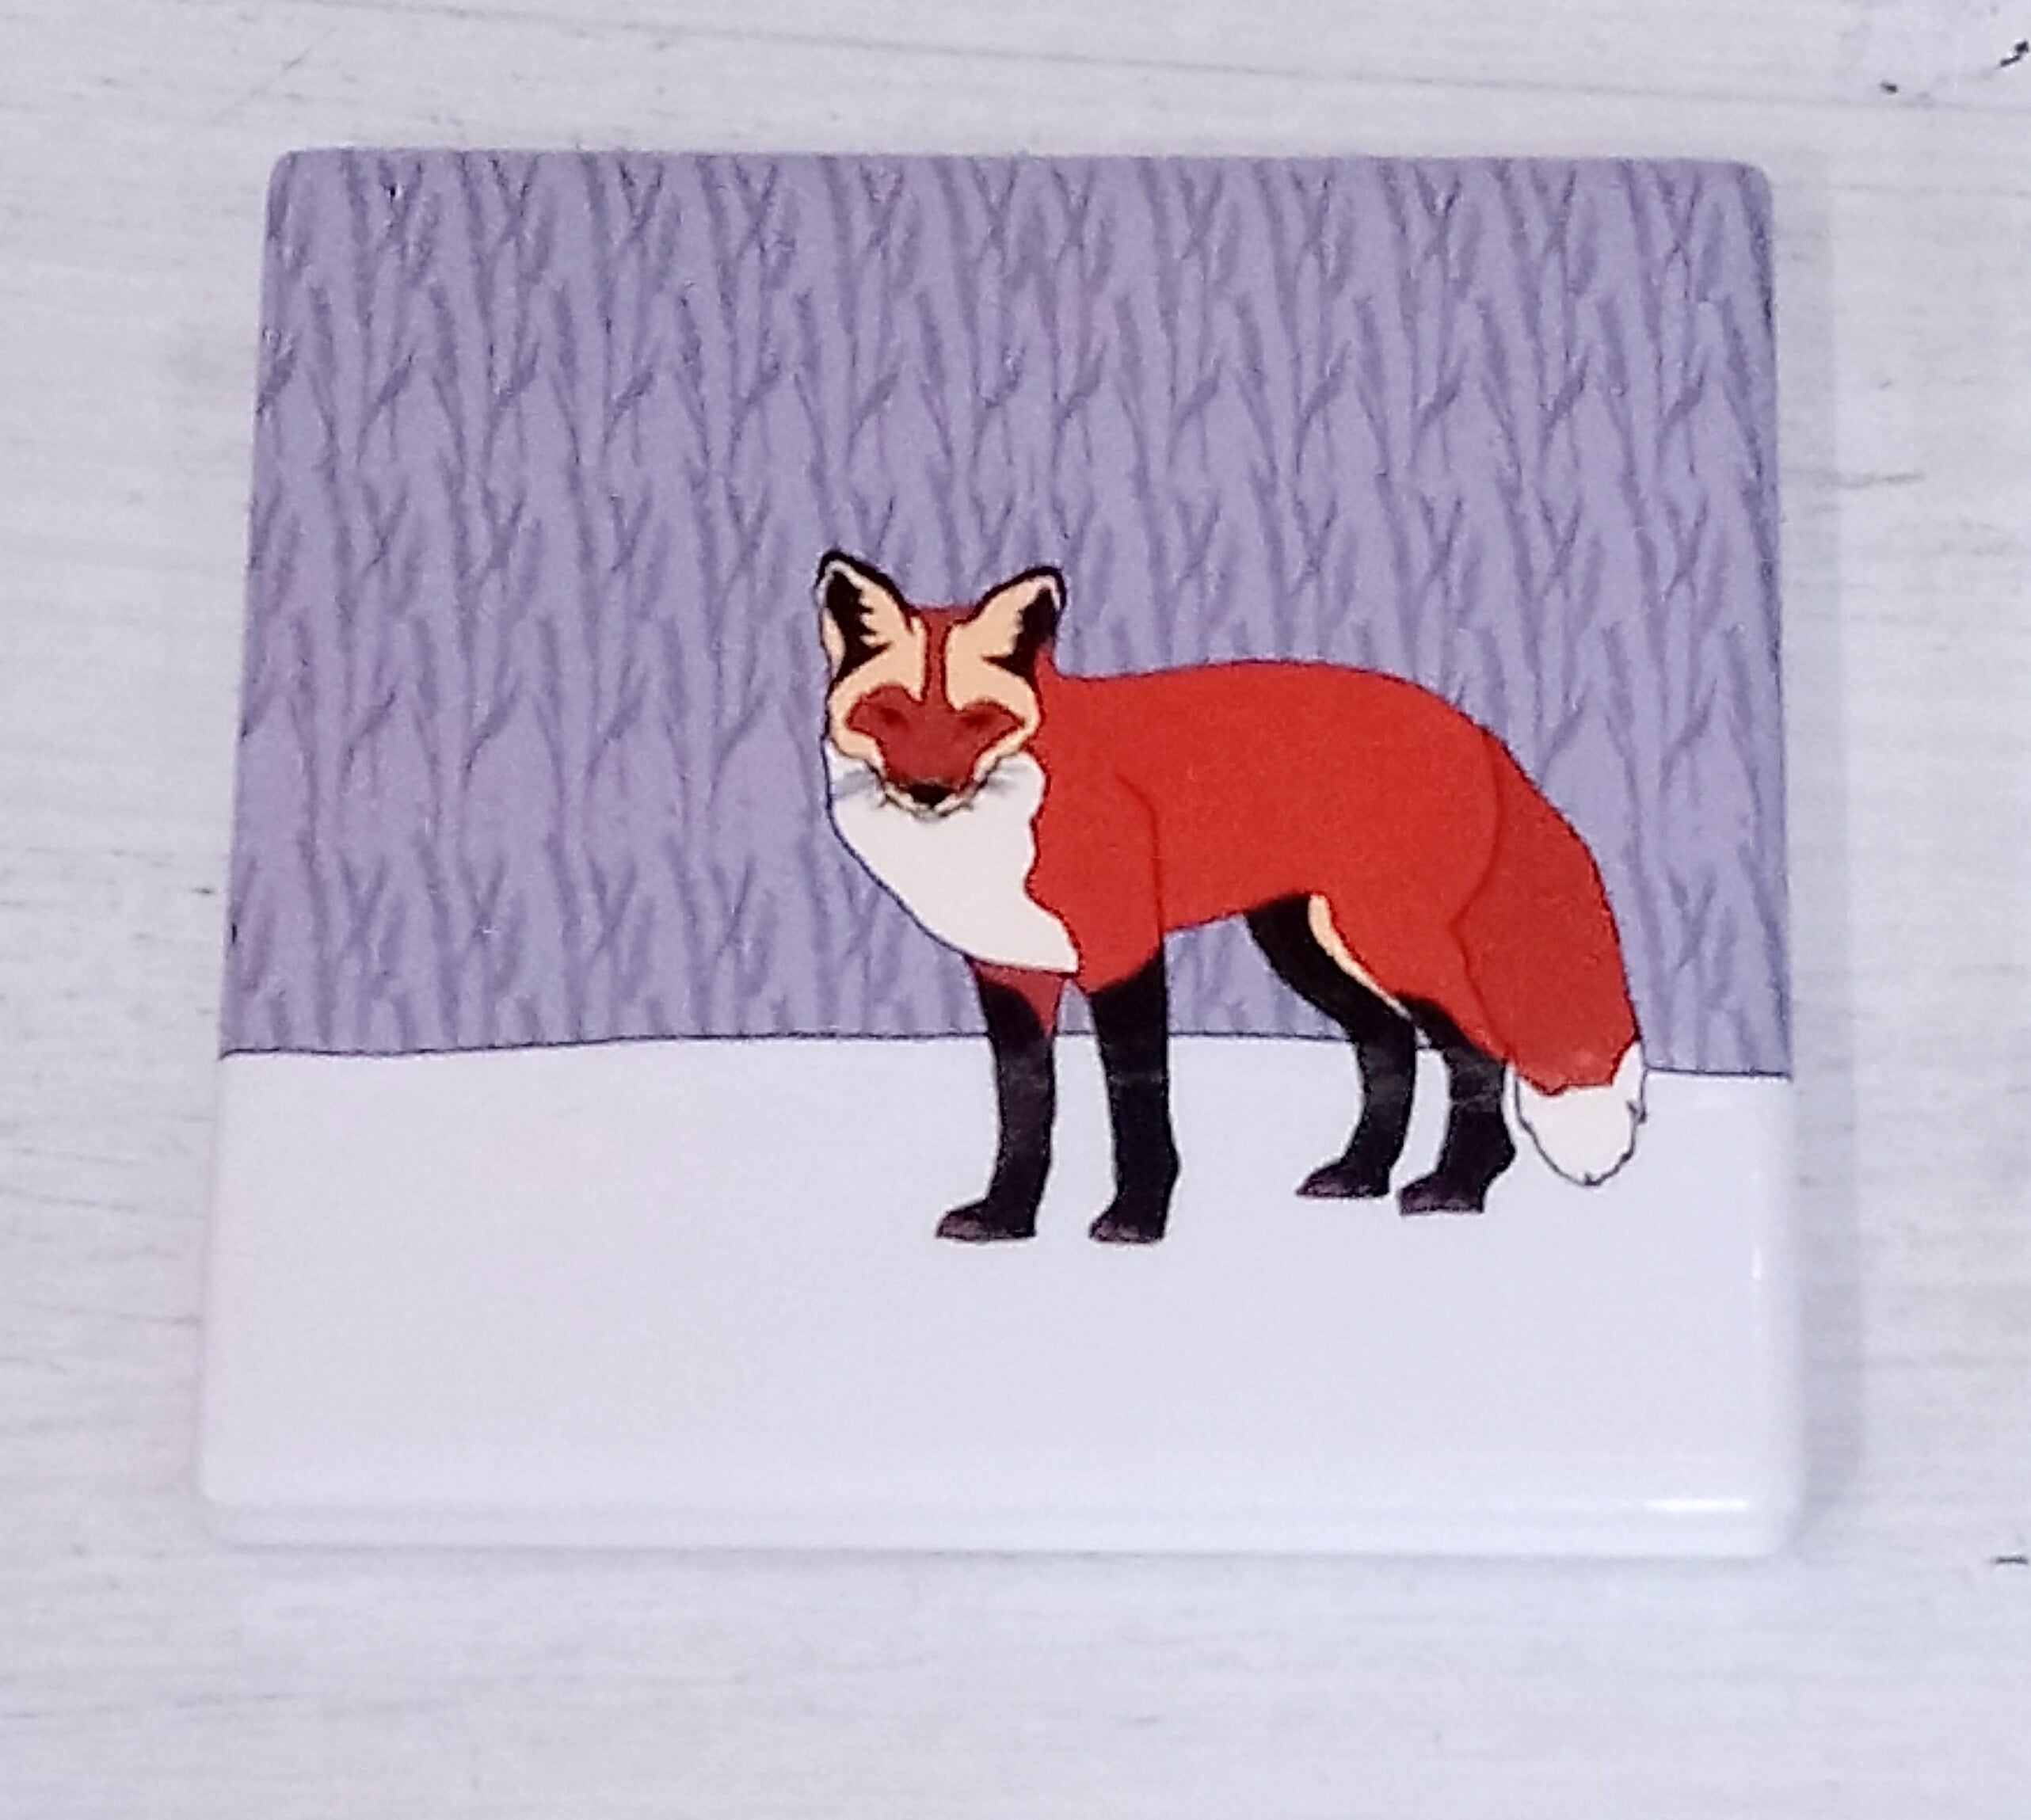 Scottish Animal Ceramic Coaster Collection by Dibujo Designs